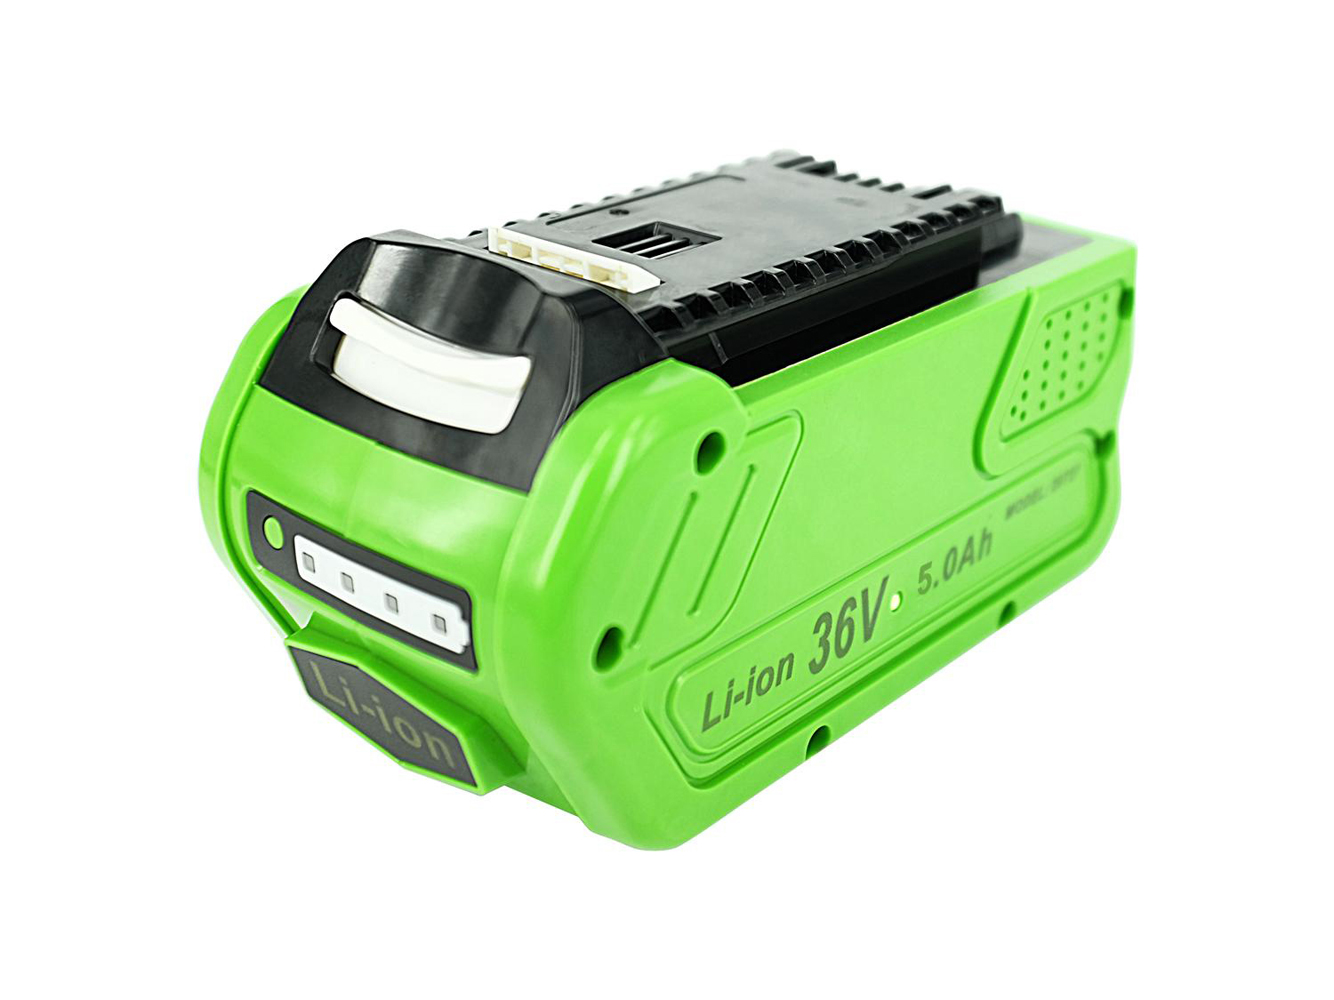 Remplacement compatible pour batterie d'outils Greenworks G40AB, G40AC, G40CS30, G40DT35, G40GC, G40HT